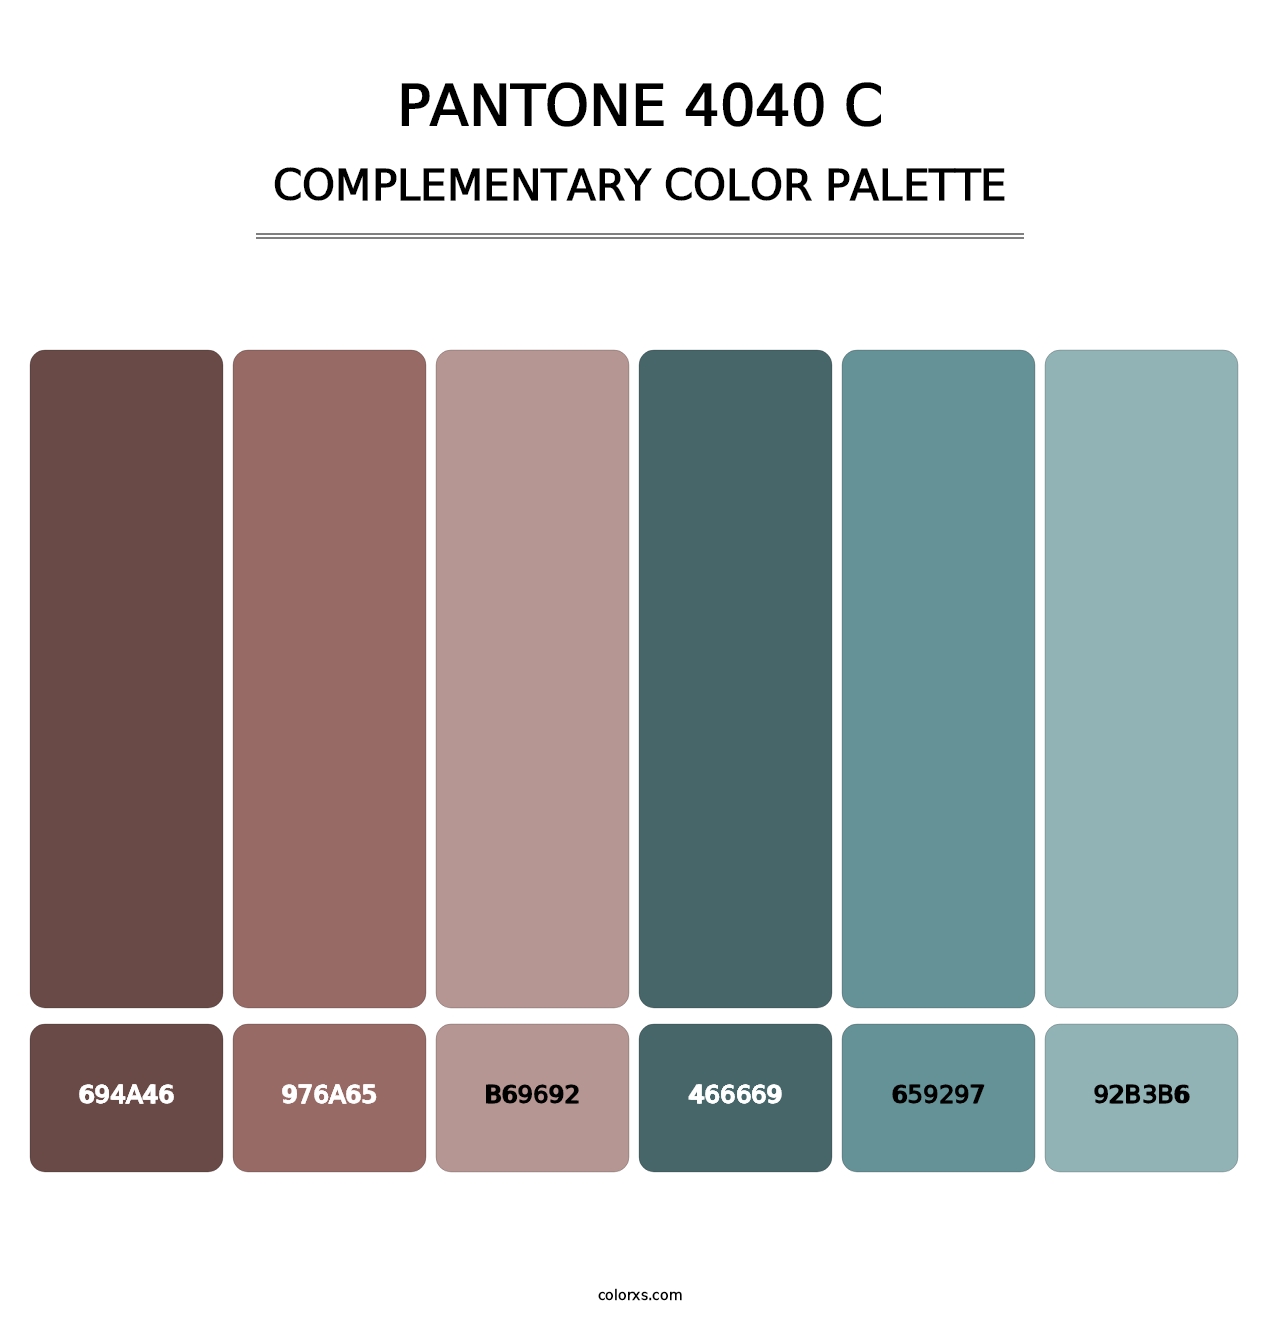 PANTONE 4040 C - Complementary Color Palette